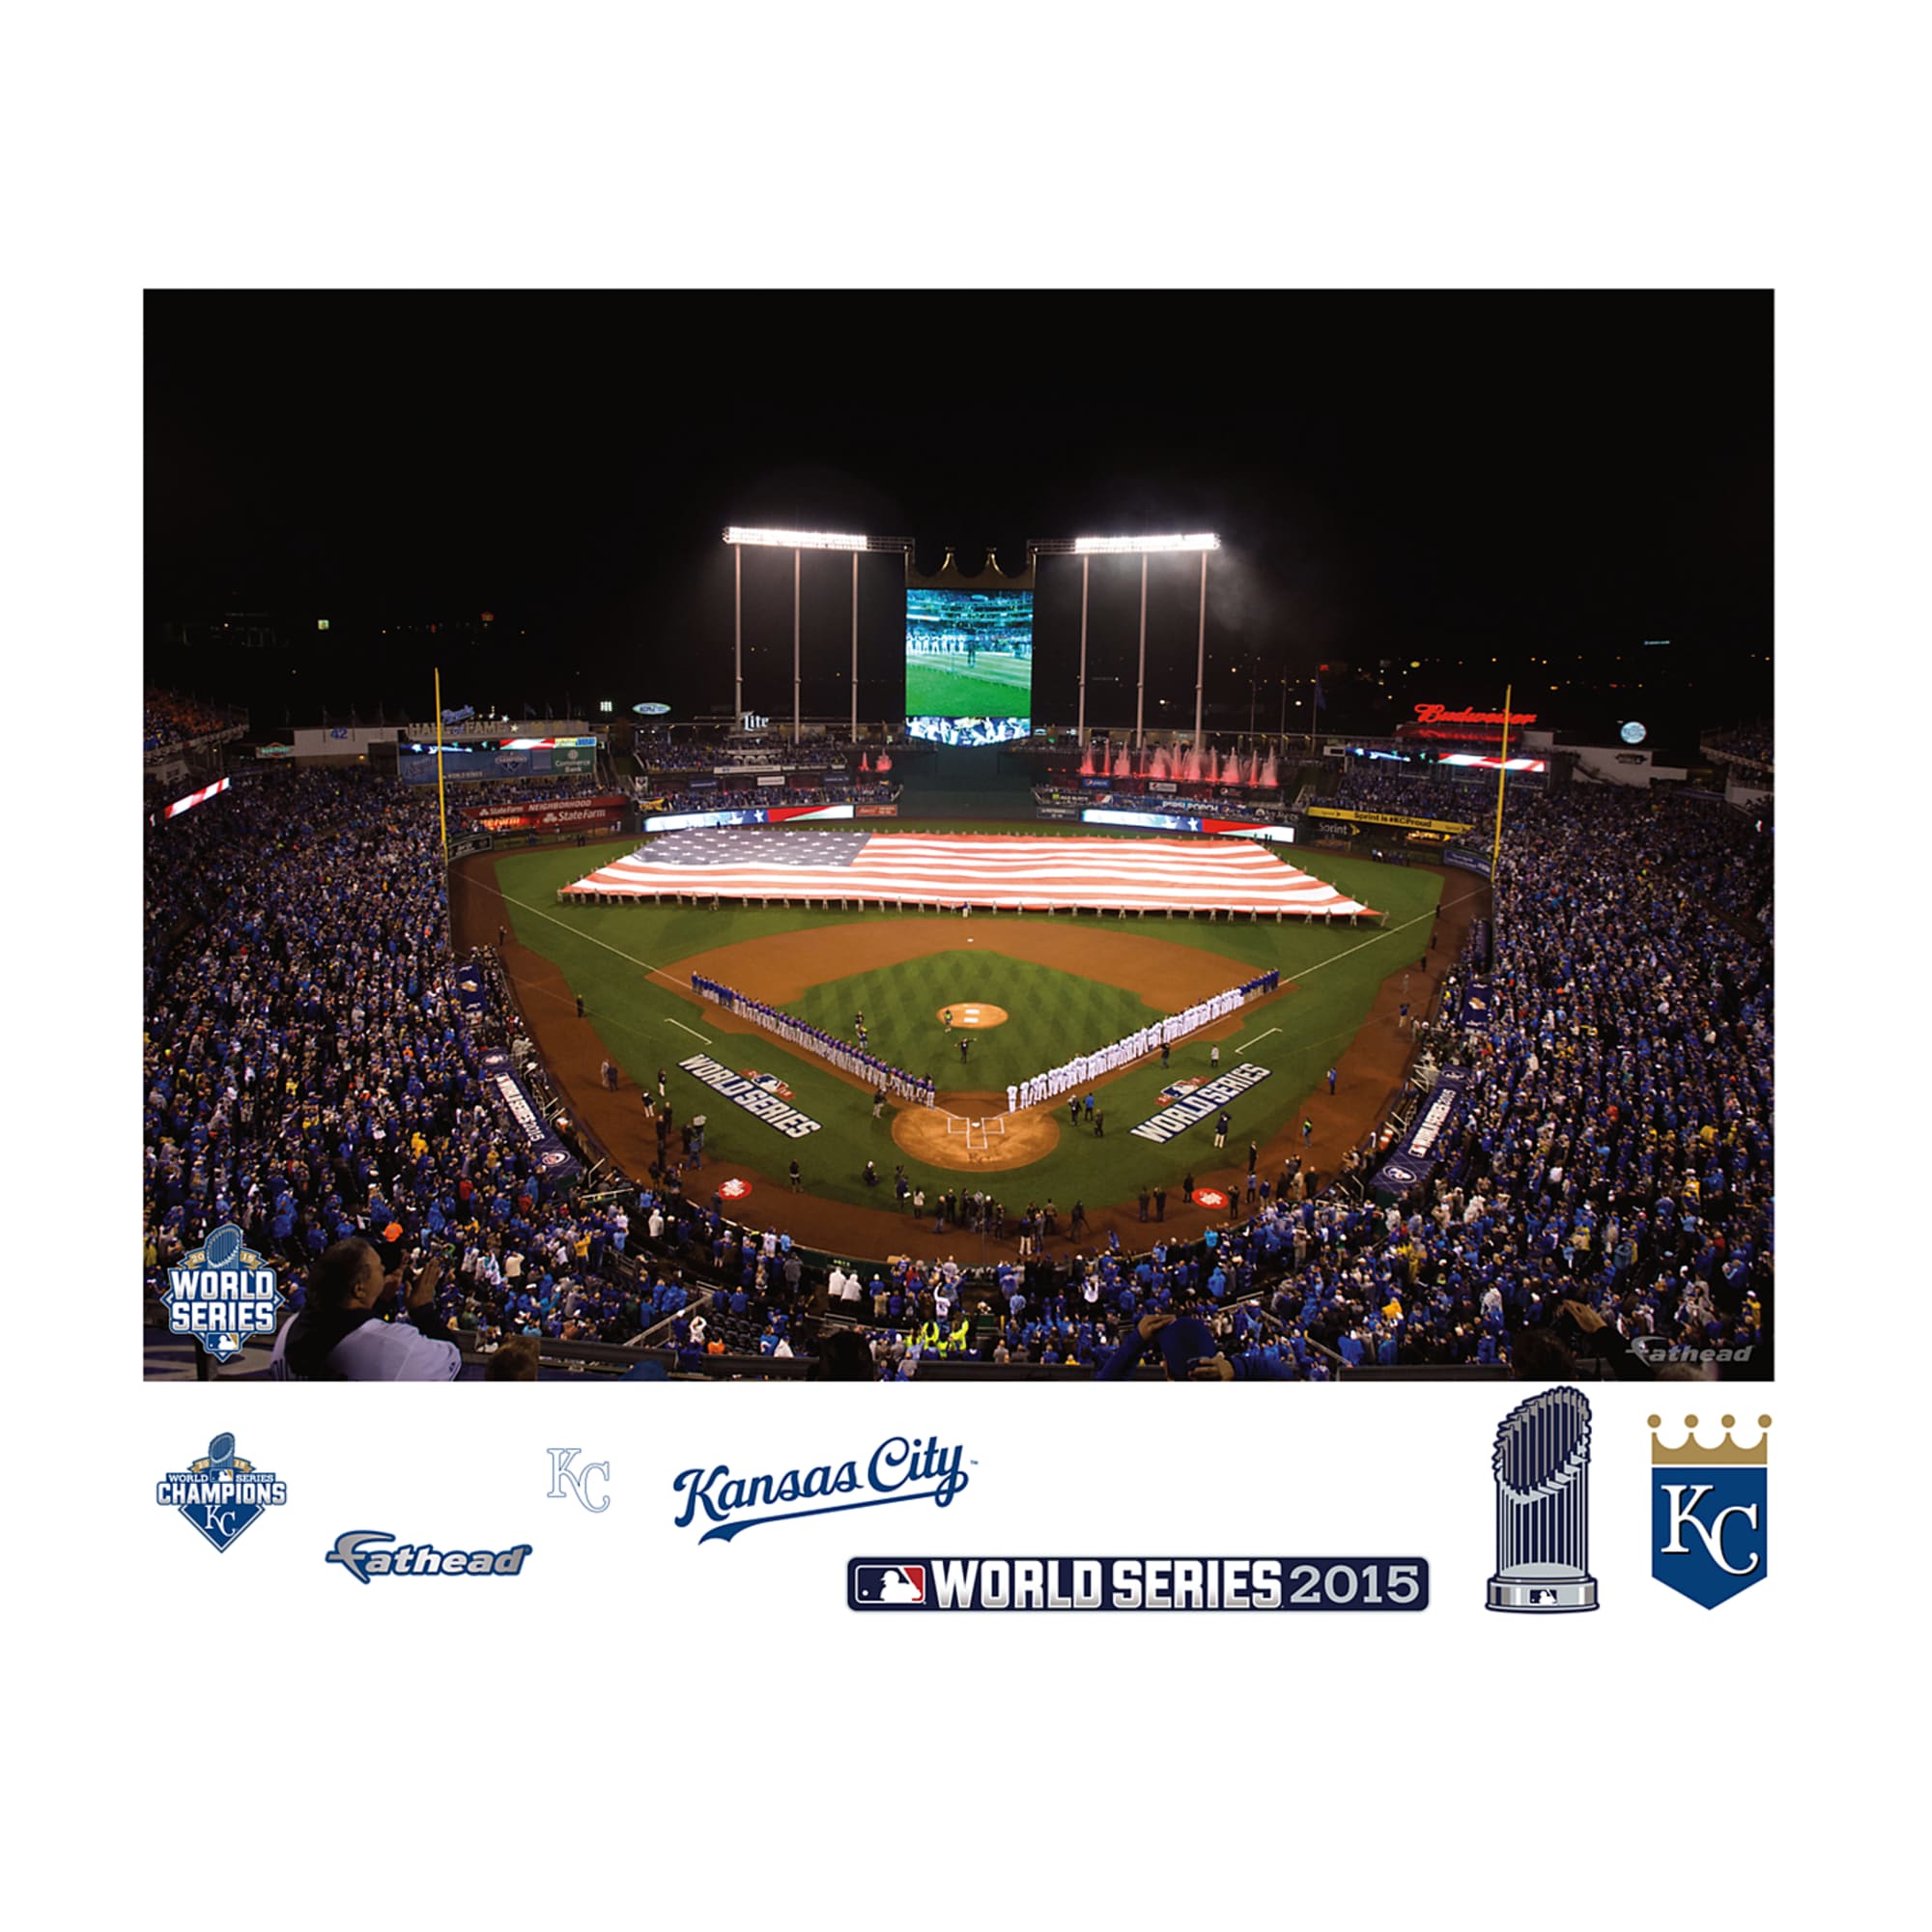  MLB Kansas City Royals 2015 World Series Champions Celebration  Framed Photo Collage, 16 x 20 : Sports & Outdoors